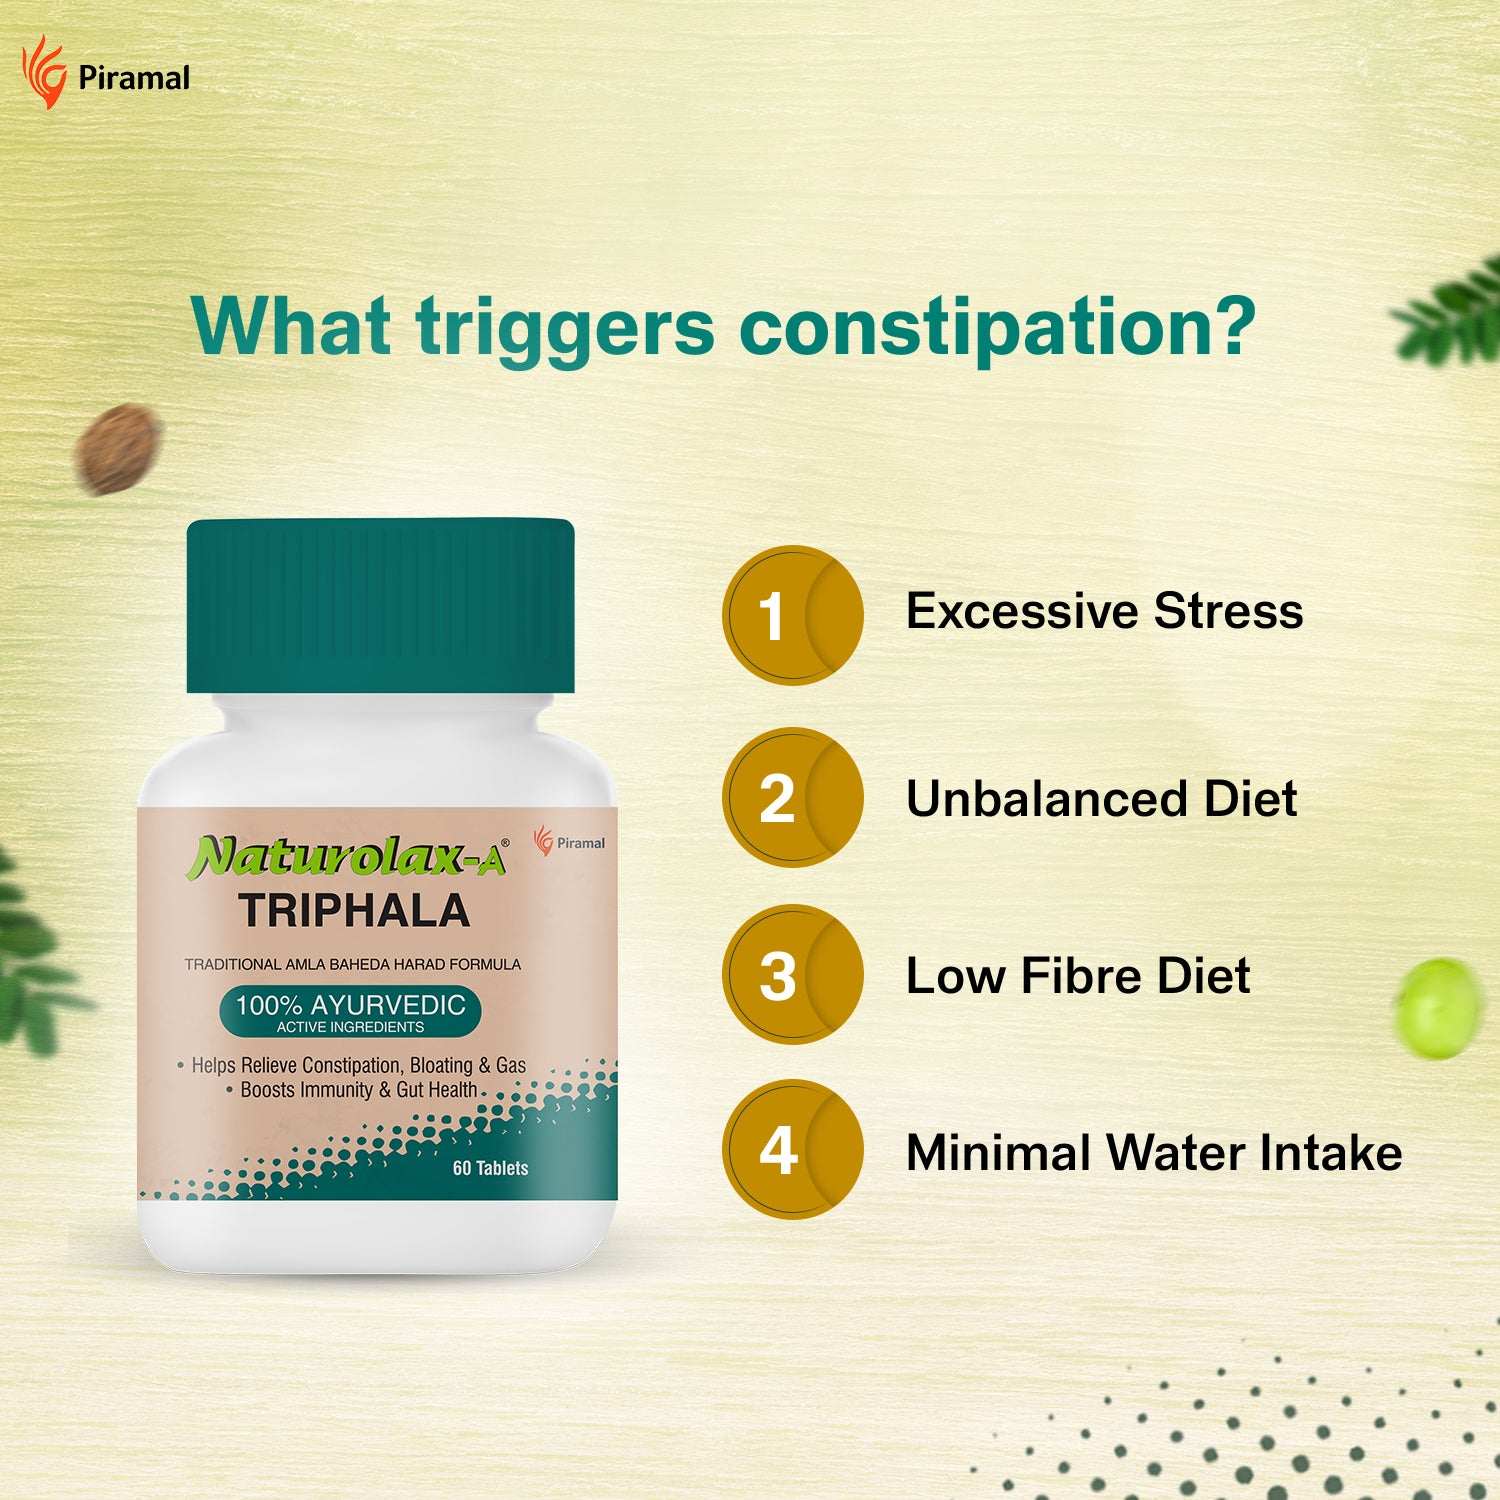 Naturolax Triphala uses